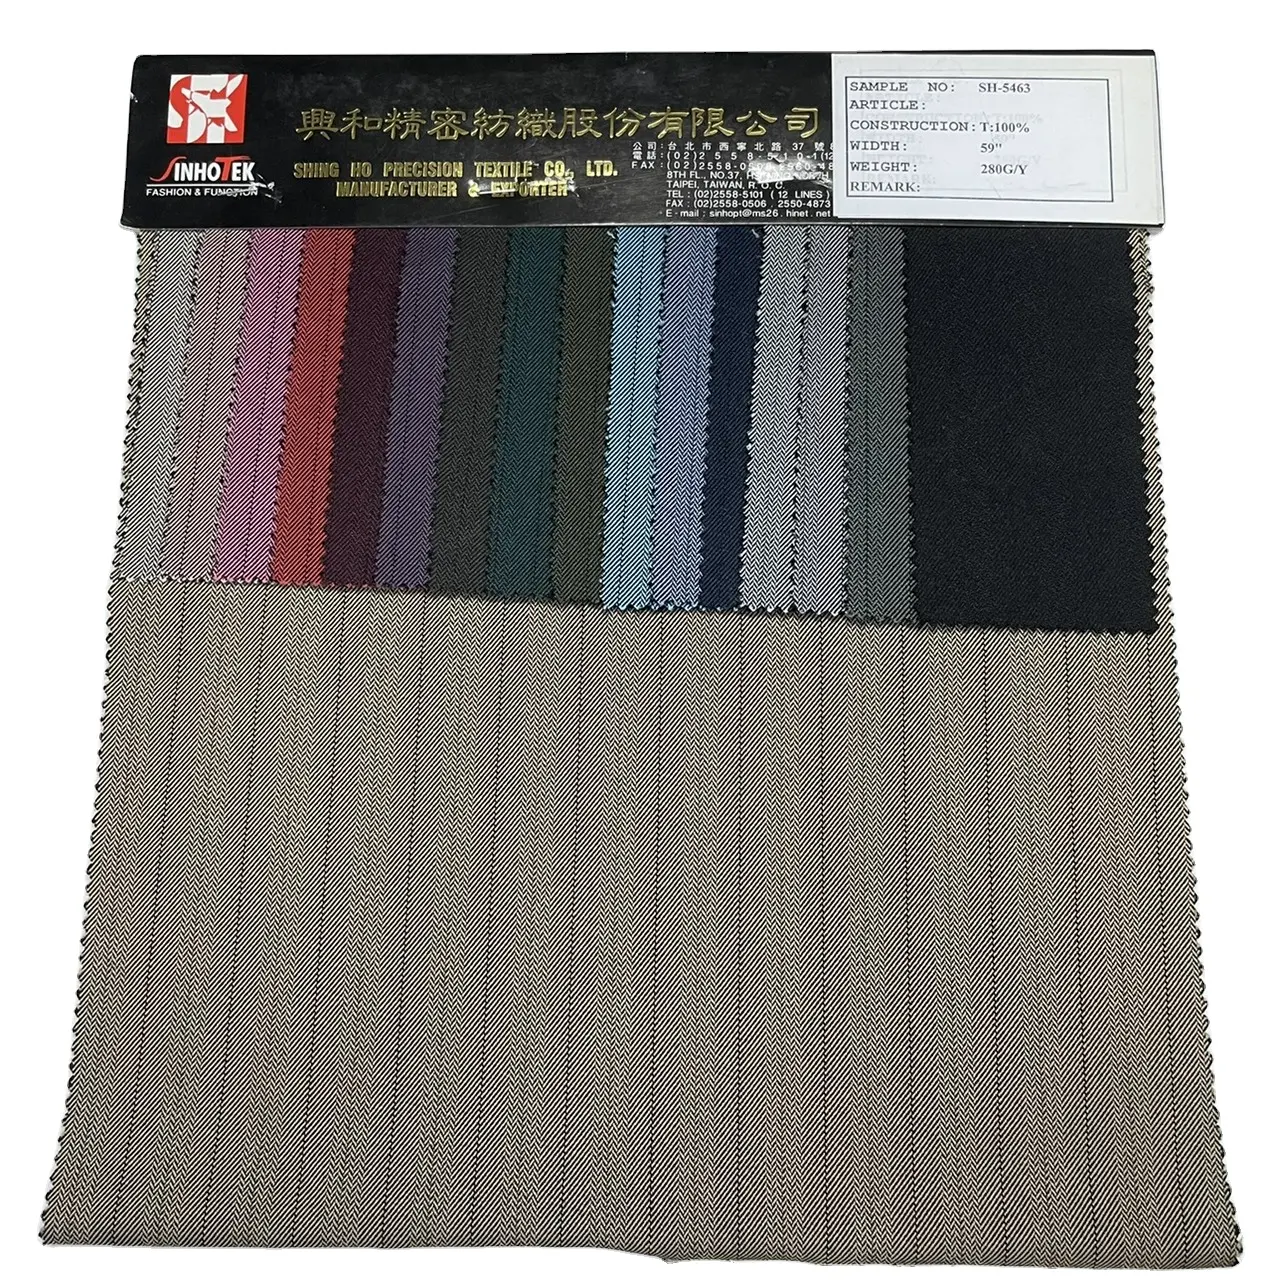 Stripe Fabric SH-5463- Striped Fabric Linen Stripes Fabric Yarn Dyed Stripe Woven Fabric